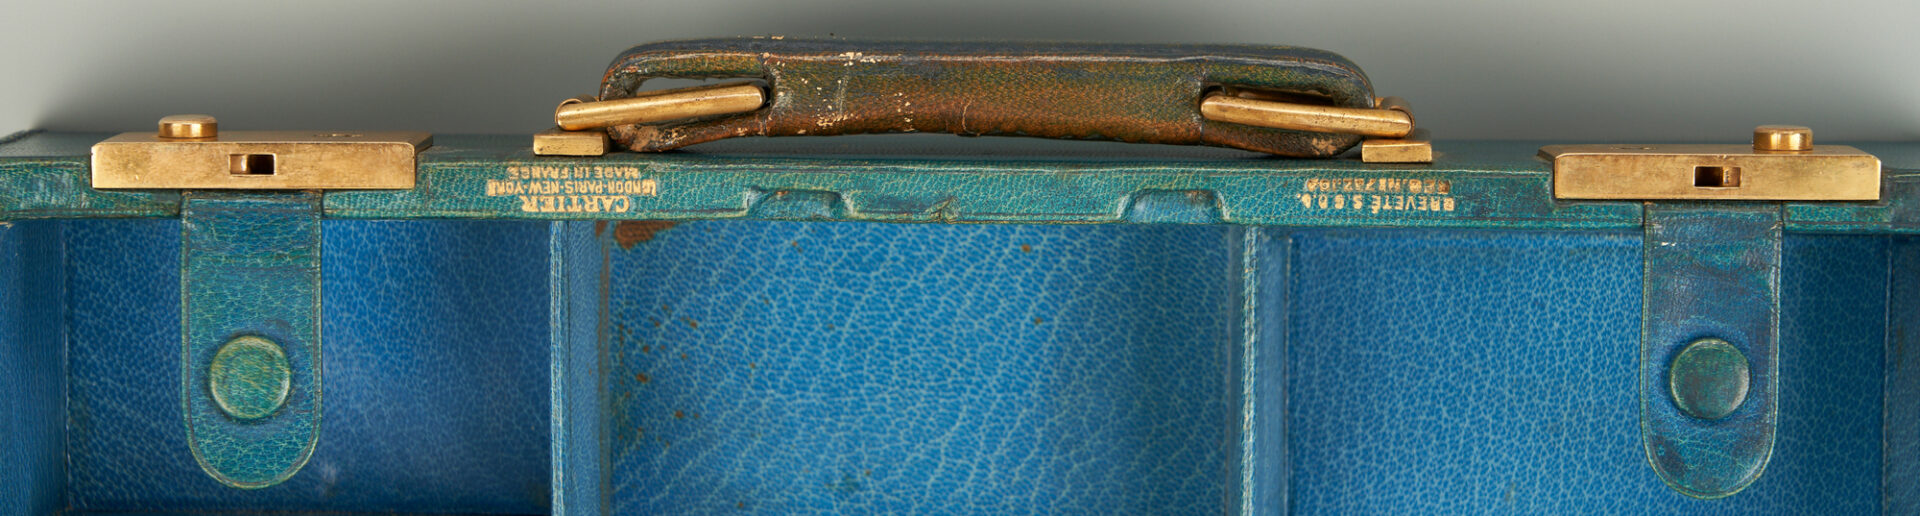 Lot 746: Cartier Blue Leather Gentleman's Dressing Case